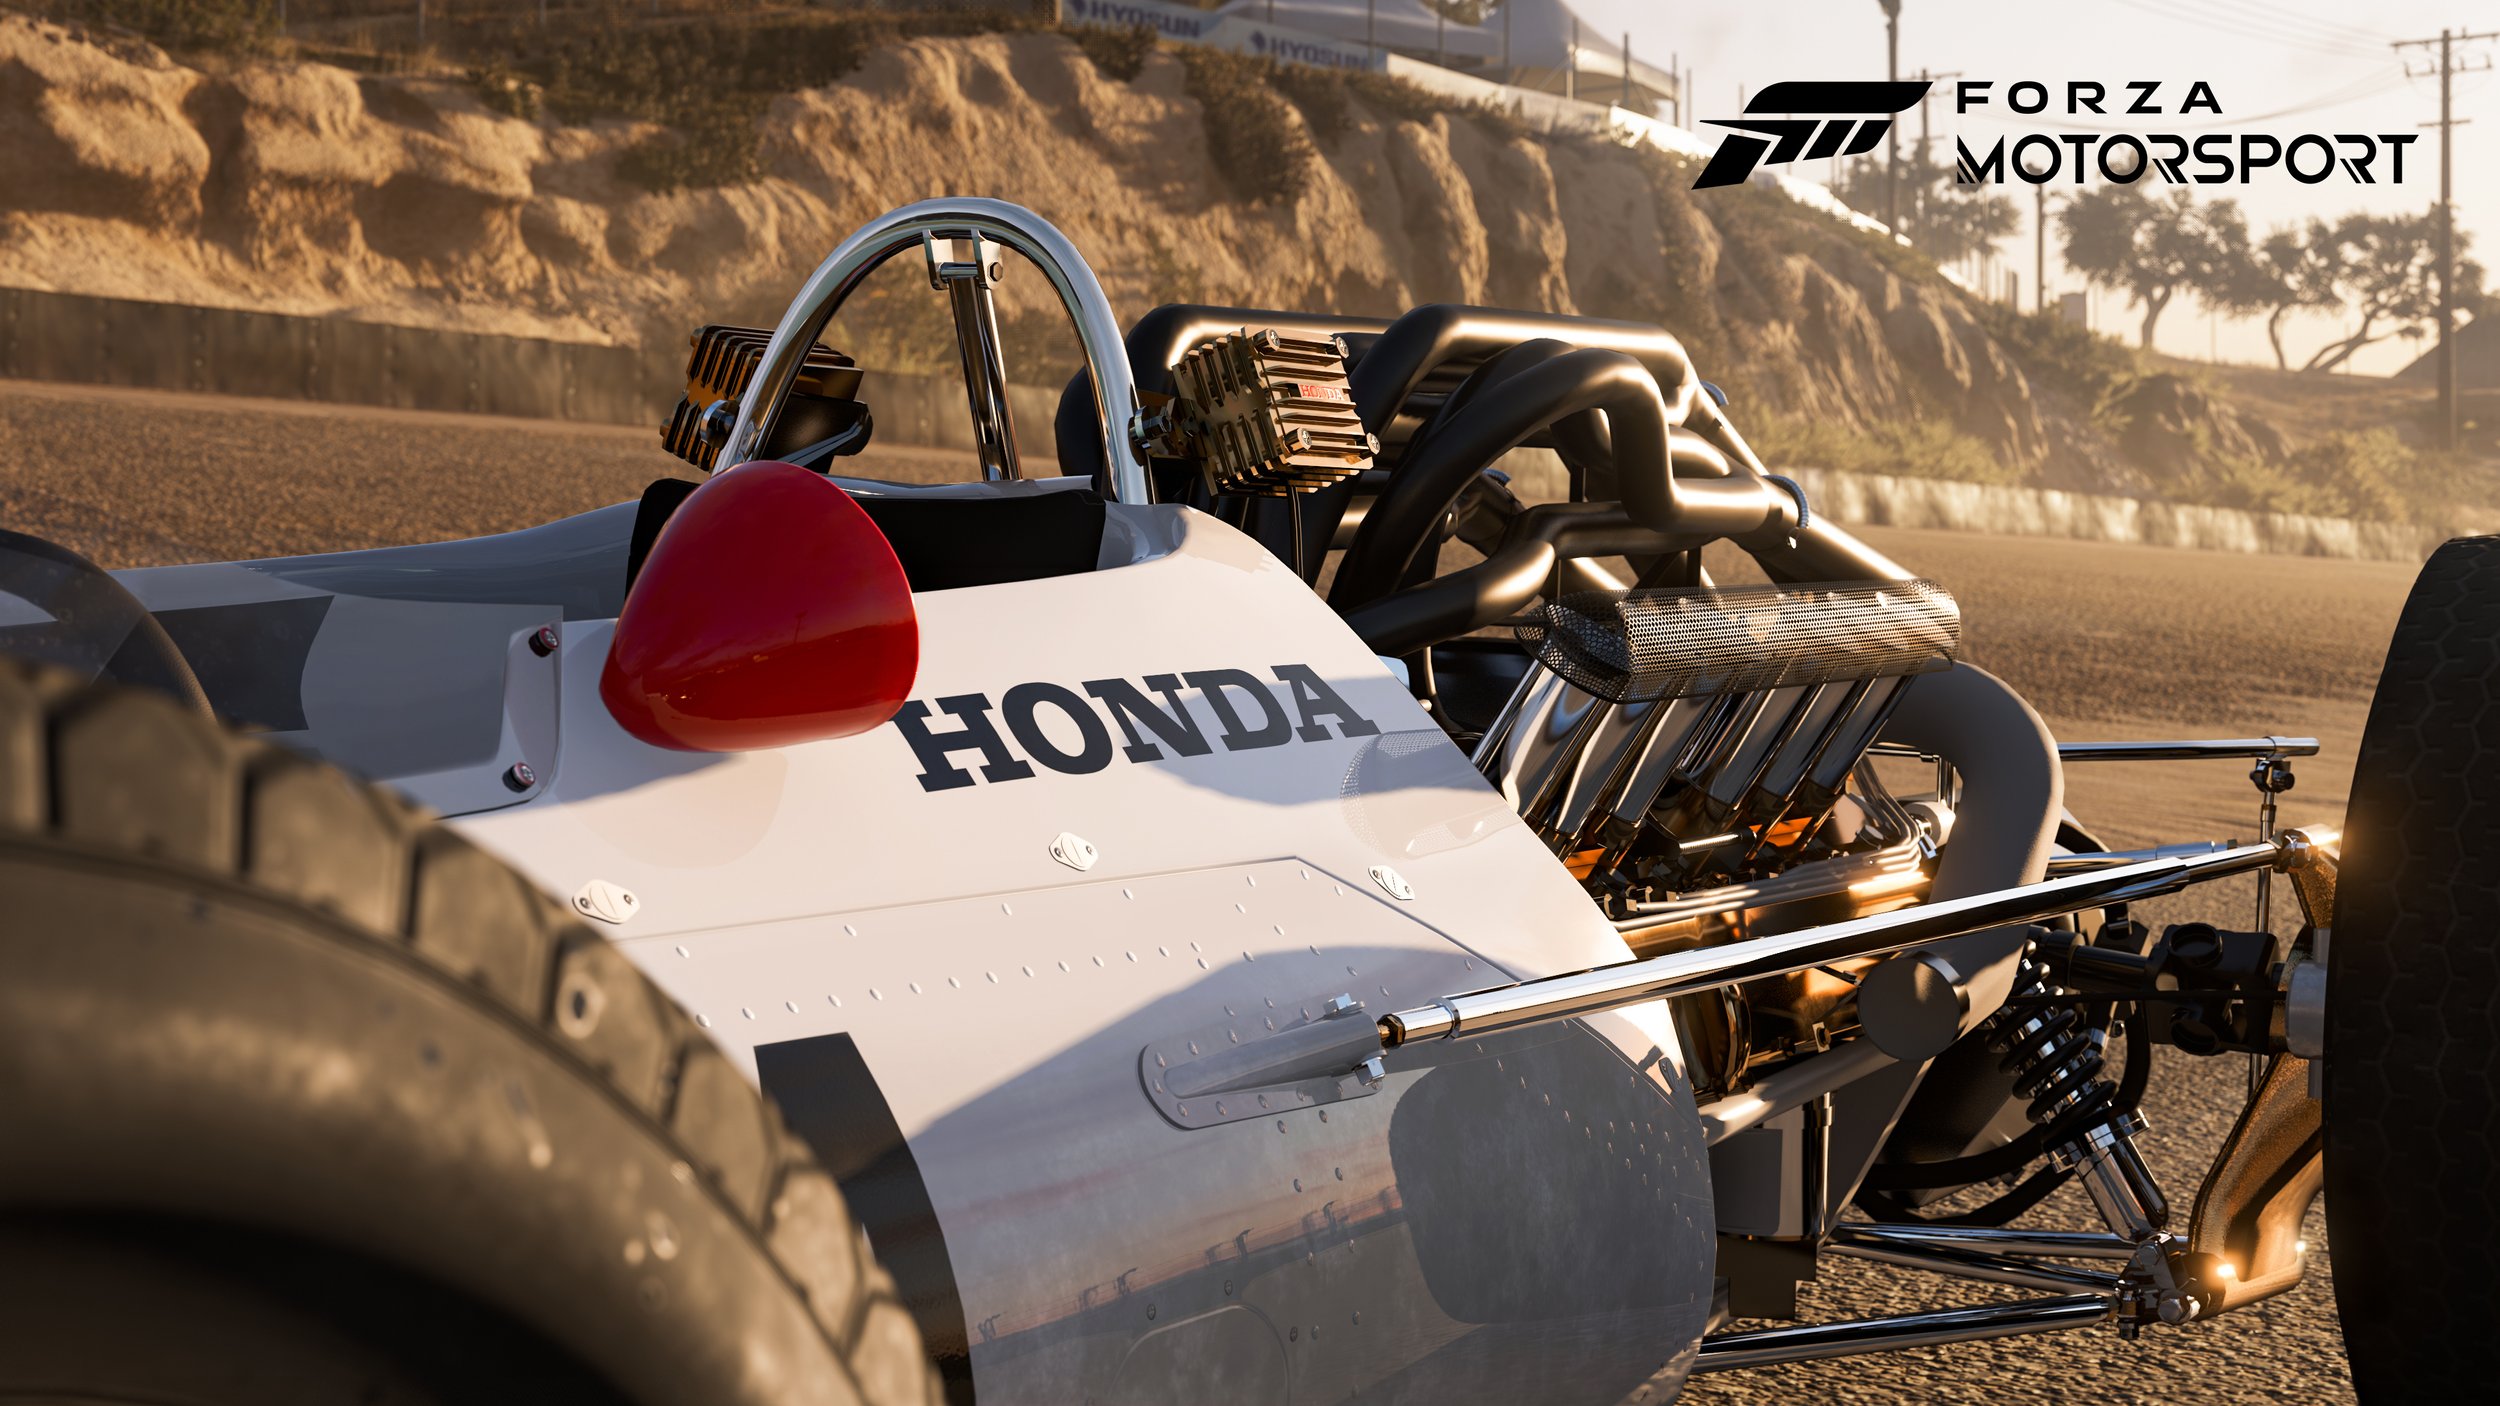 Forza_Motorsport-XboxGamesShowcase2022-PressKit-09-16x9_WM-56470f6fa7b975ef93ad.jpg